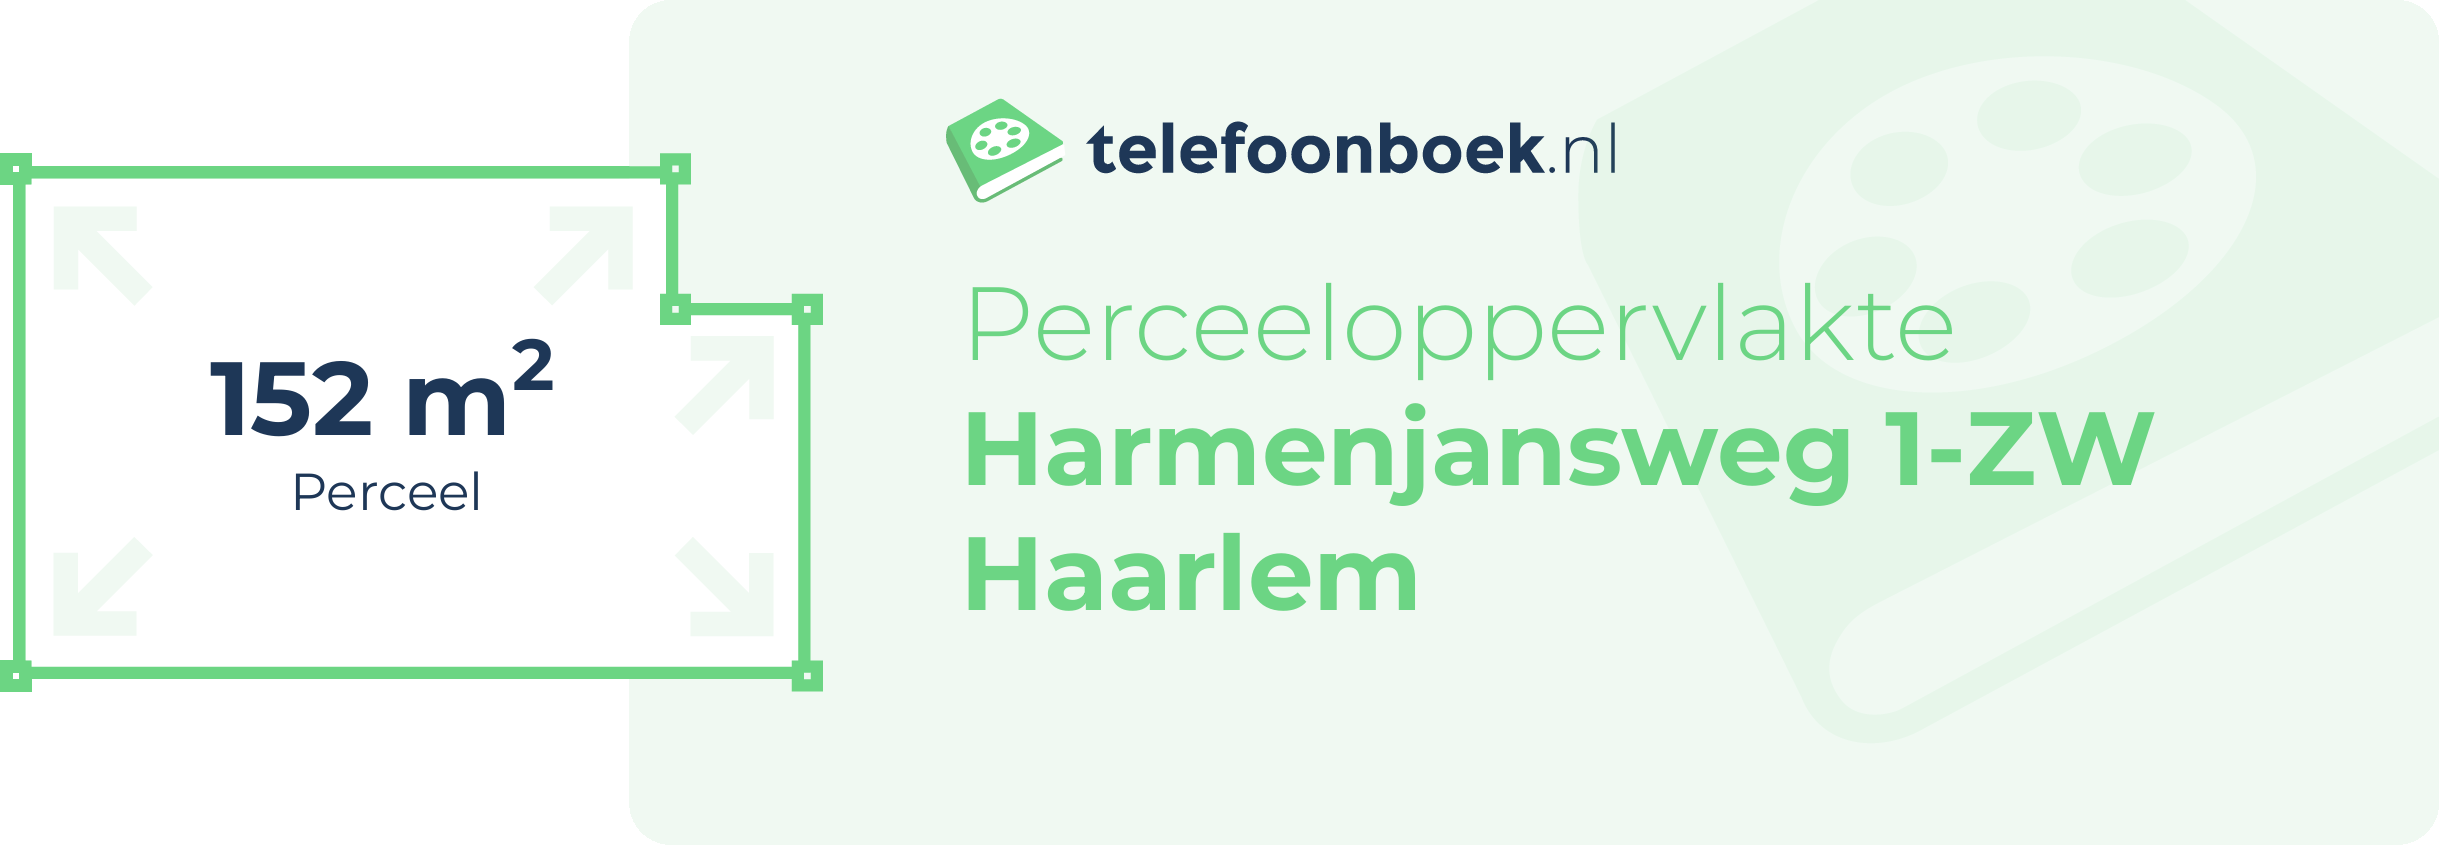 Perceeloppervlakte Harmenjansweg 1-ZW Haarlem